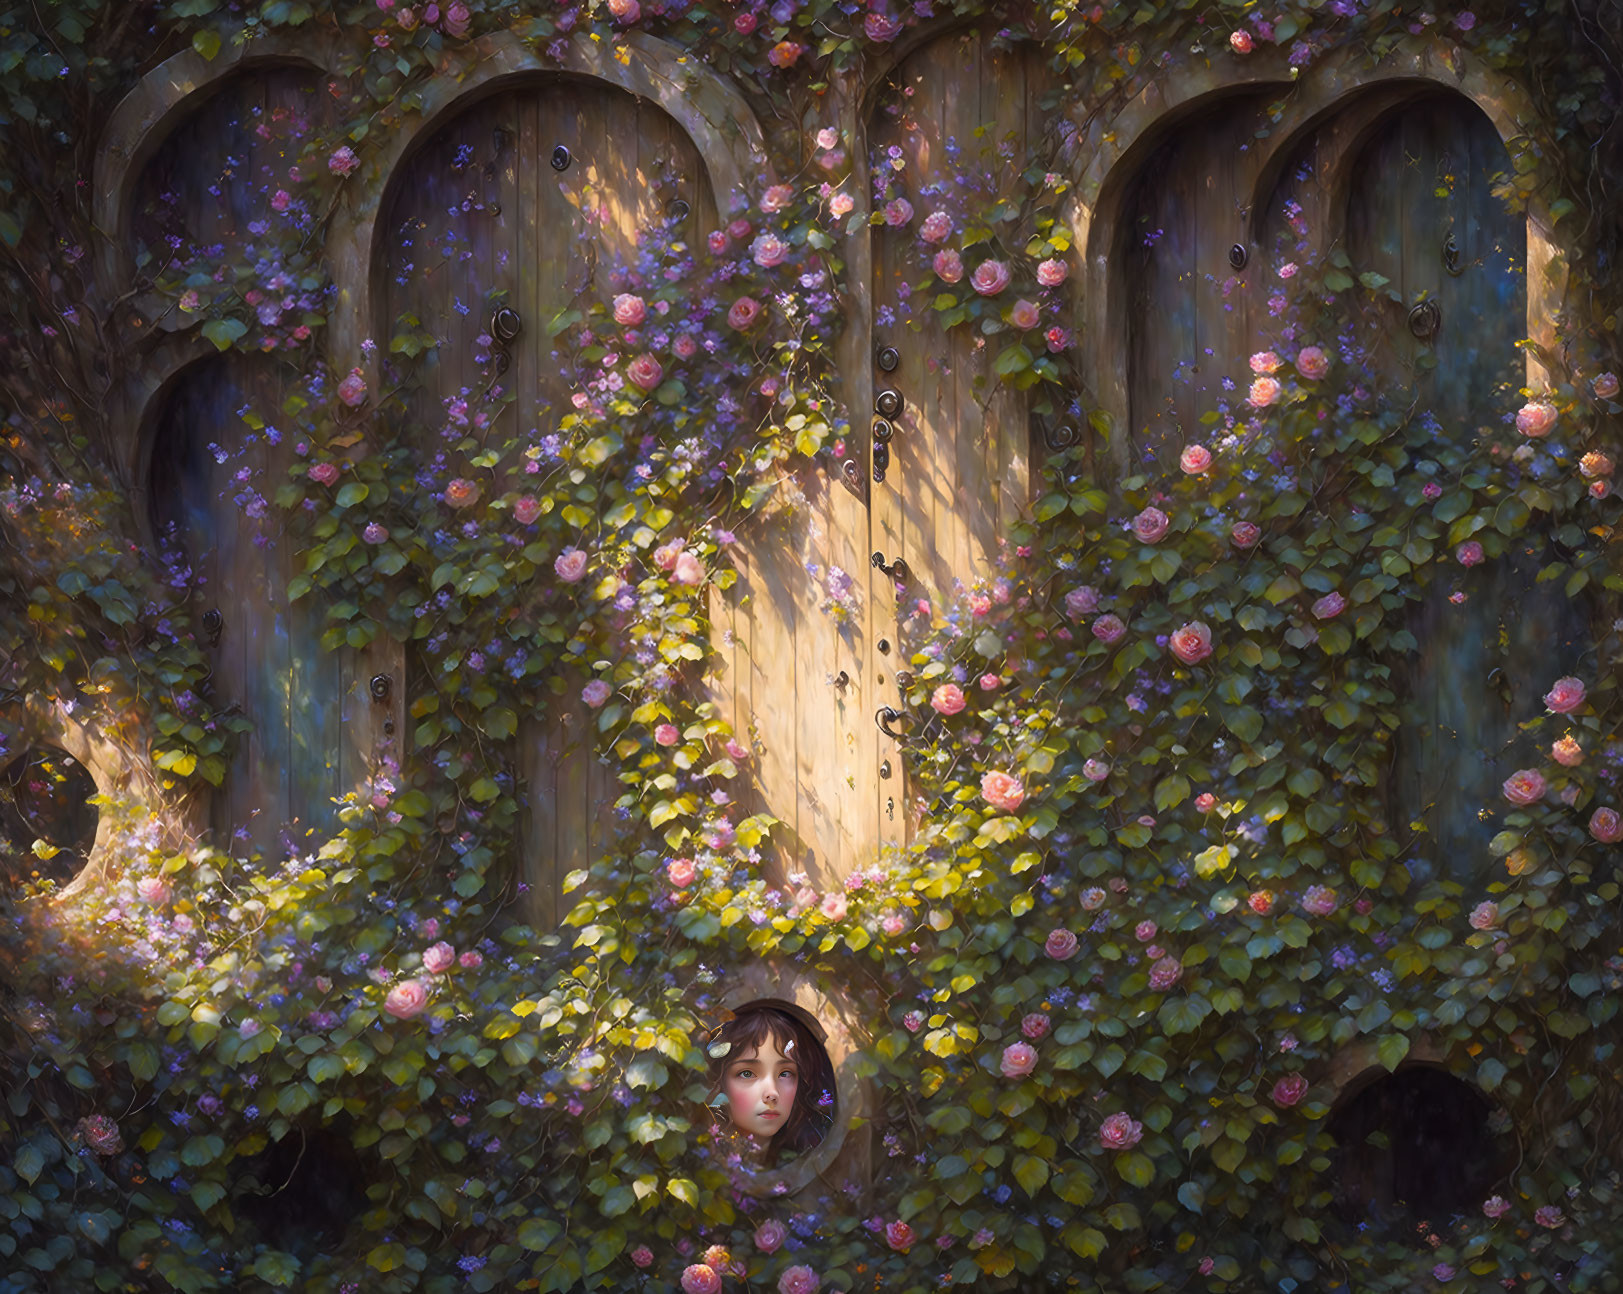 Person peeking through floral overgrown doorway in ivy-filled wall.